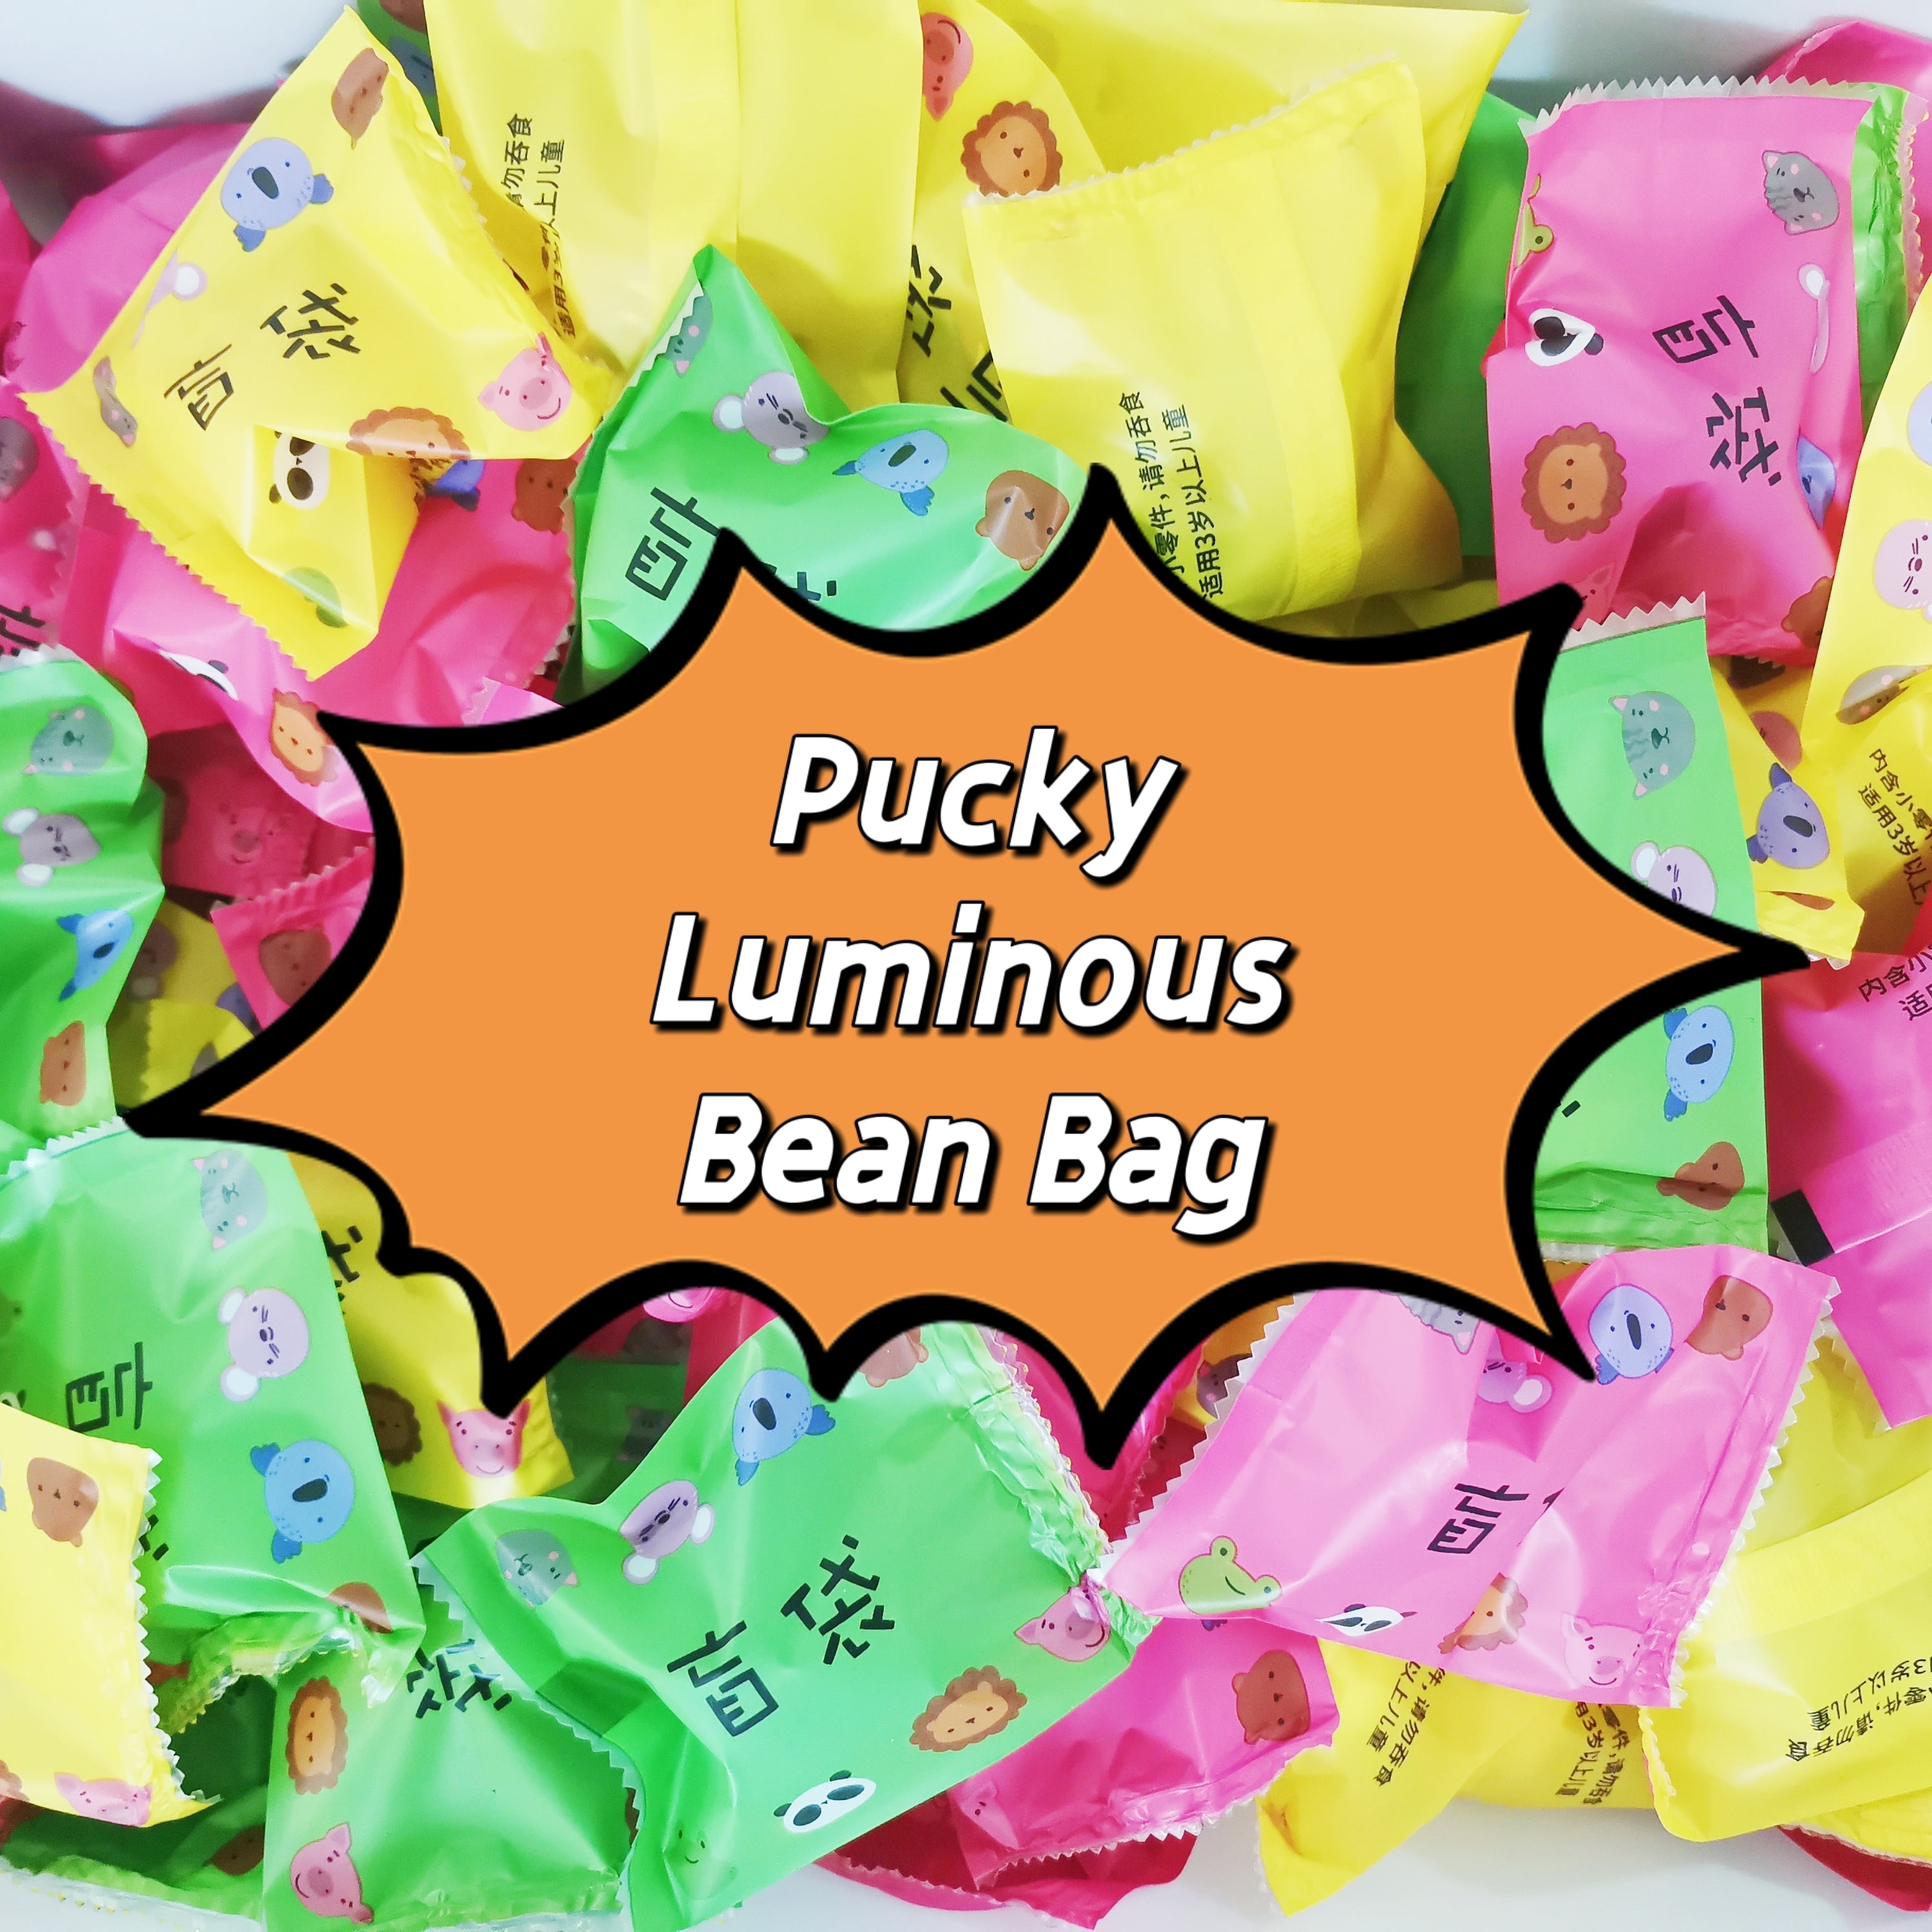 Pucky Luminous Bean Blind Bag DingDing Bag-Open in Livestream